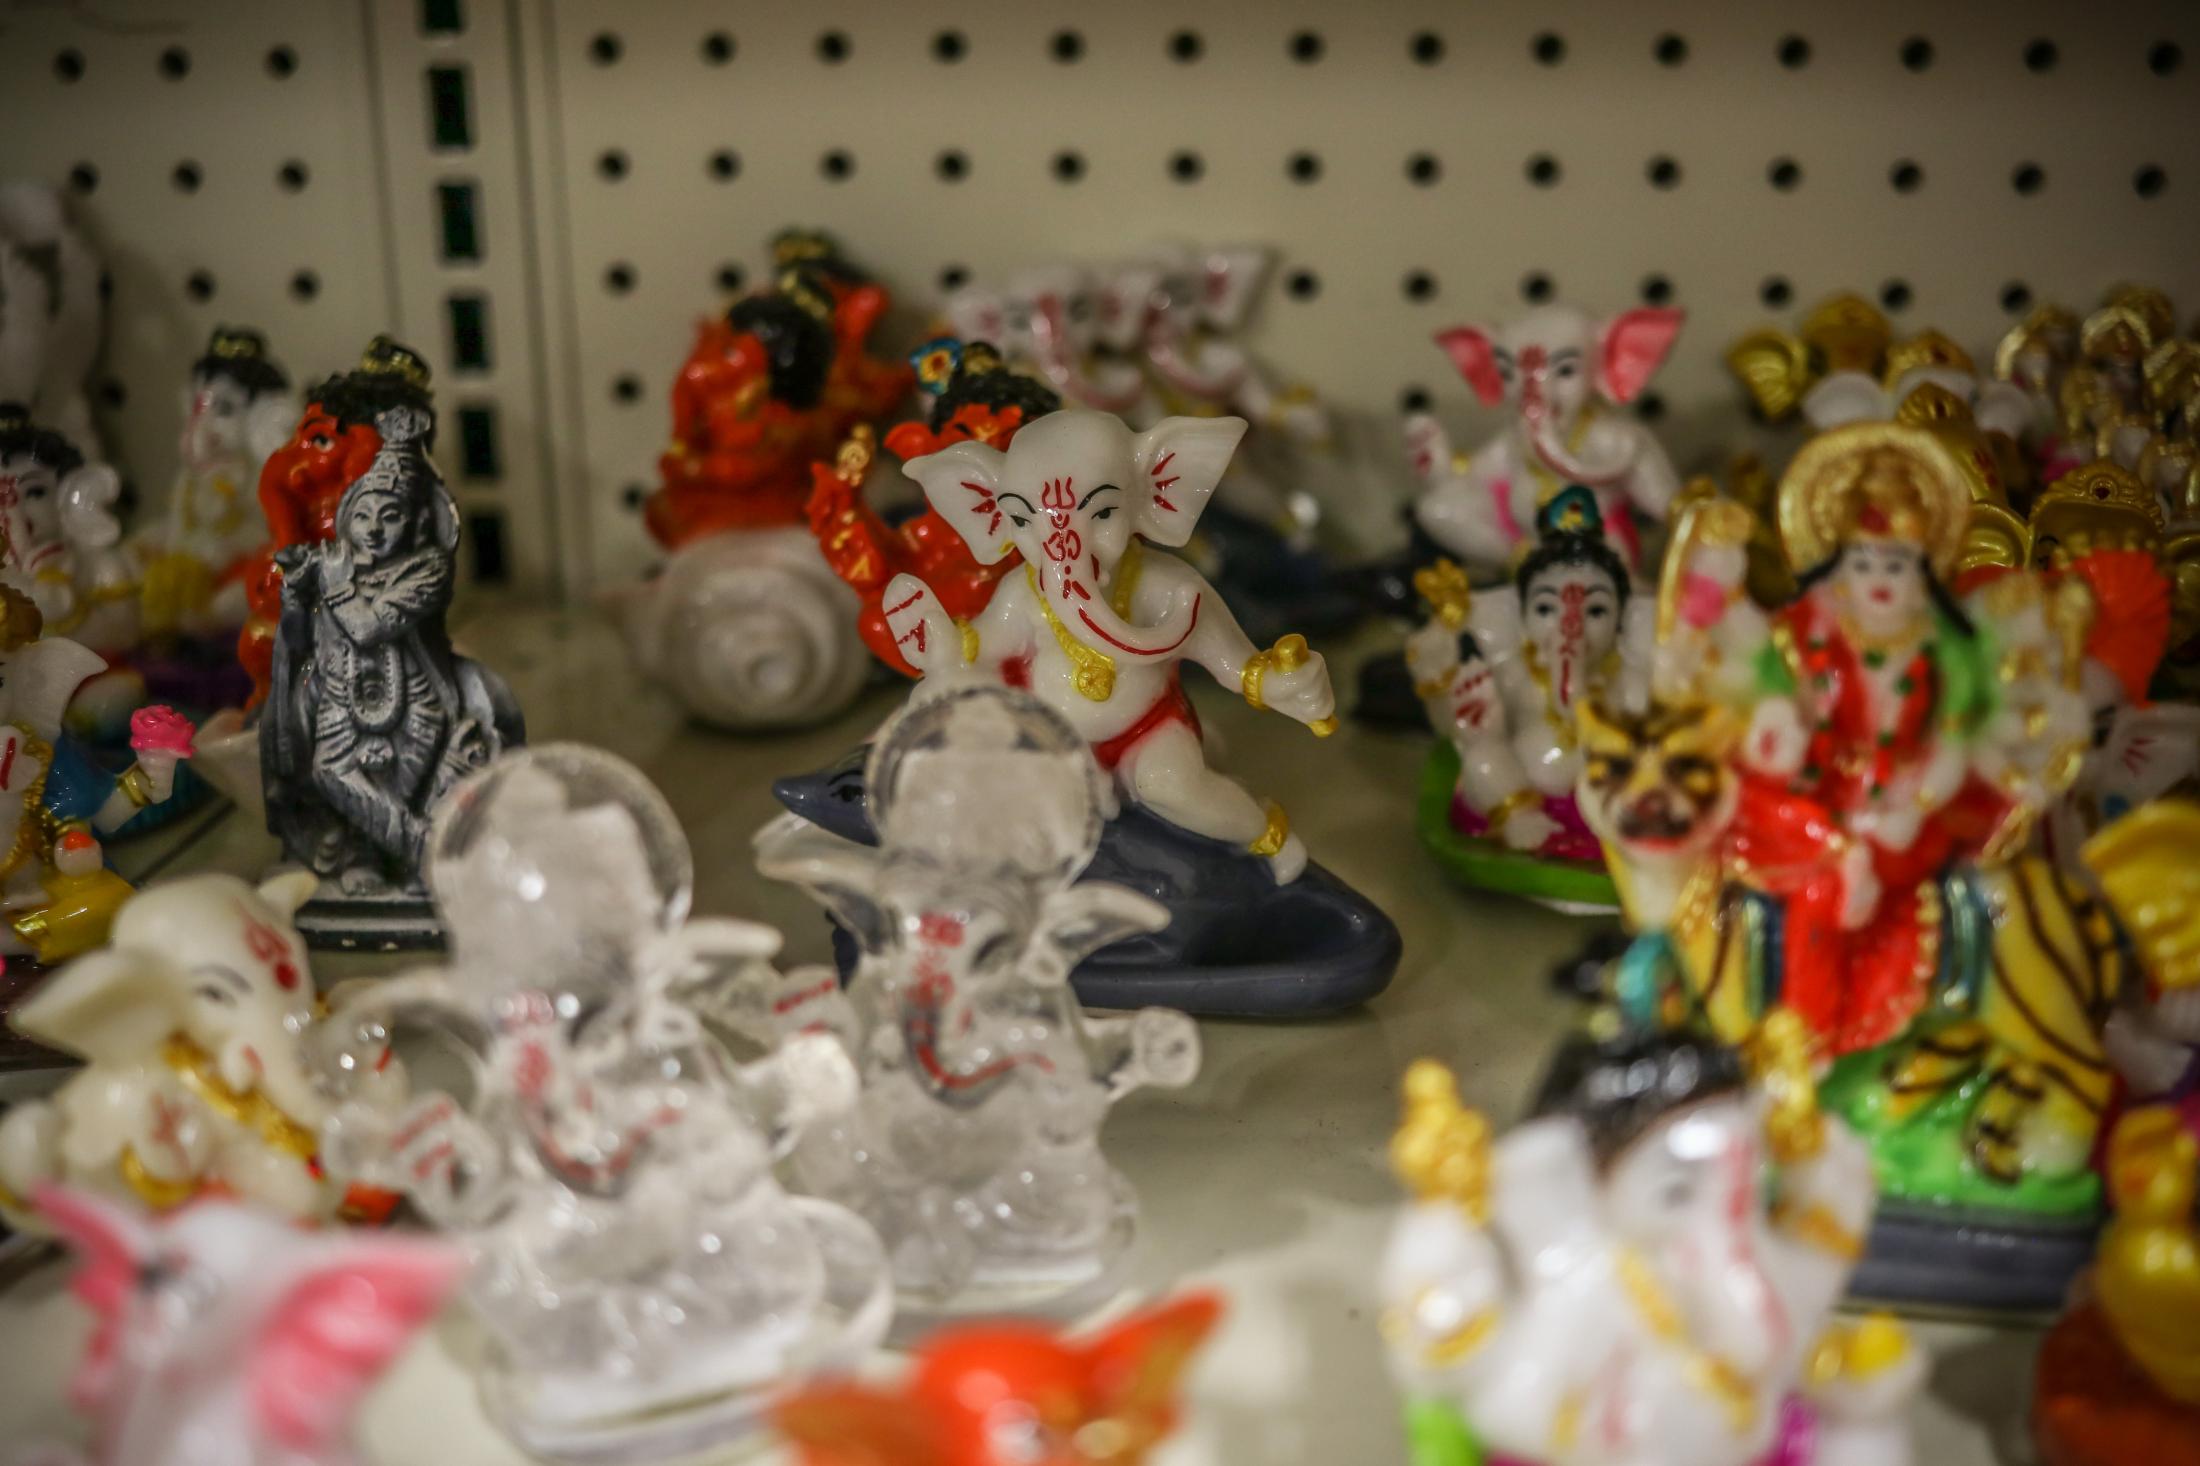 Spices Store - Idols of Hindu gods at New India Bazar, Santa Clara,...